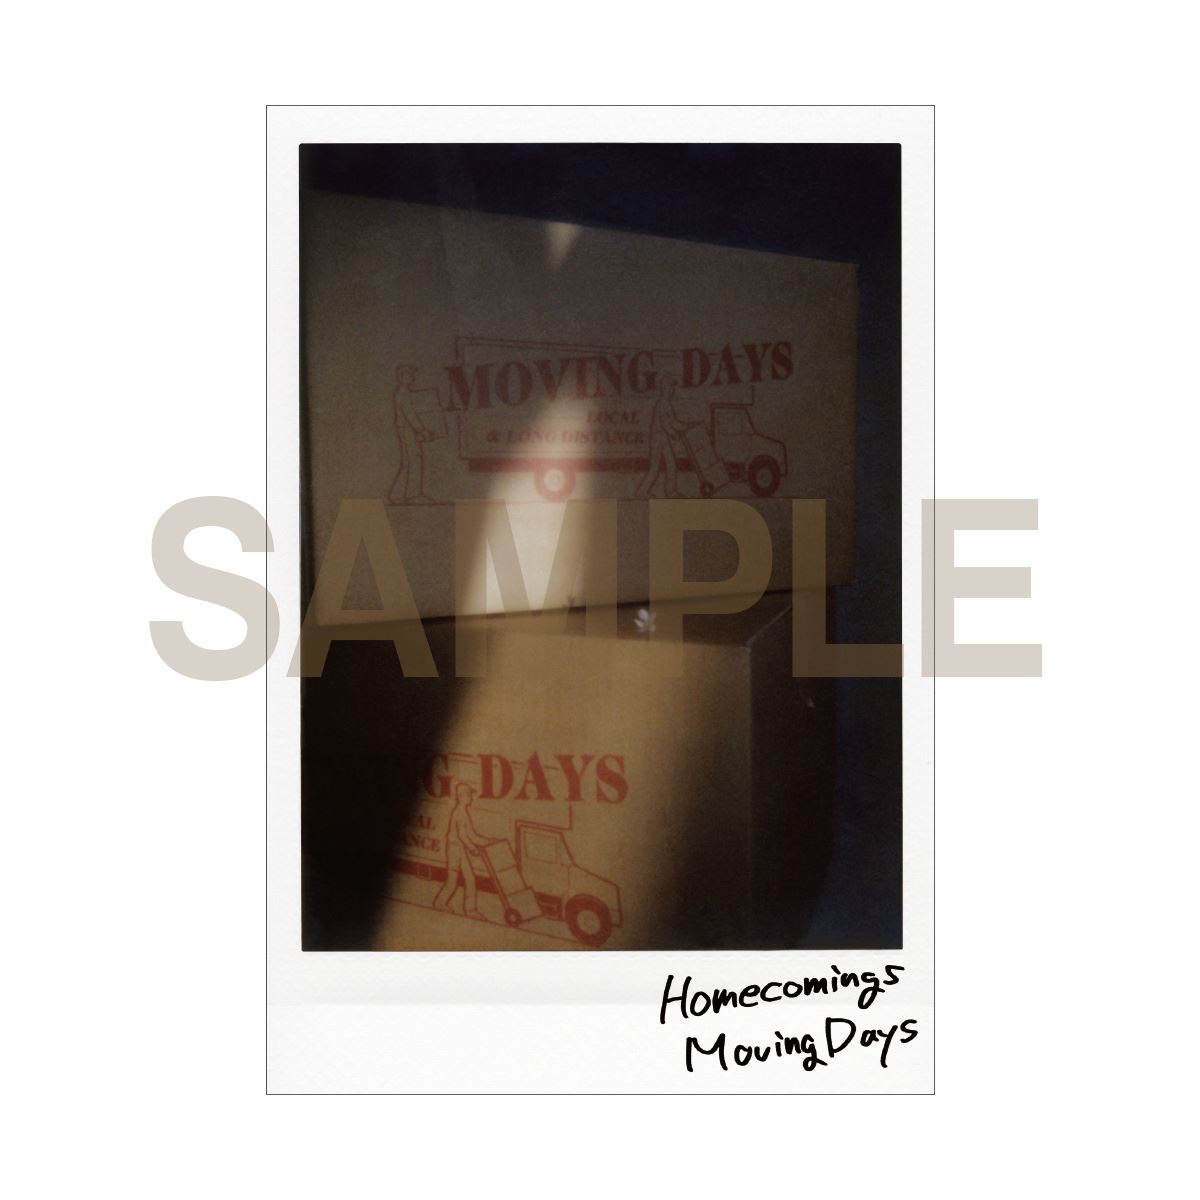 Homecomings メジャーデビューアルバム『Moving Days』ポストカード TYPE-D